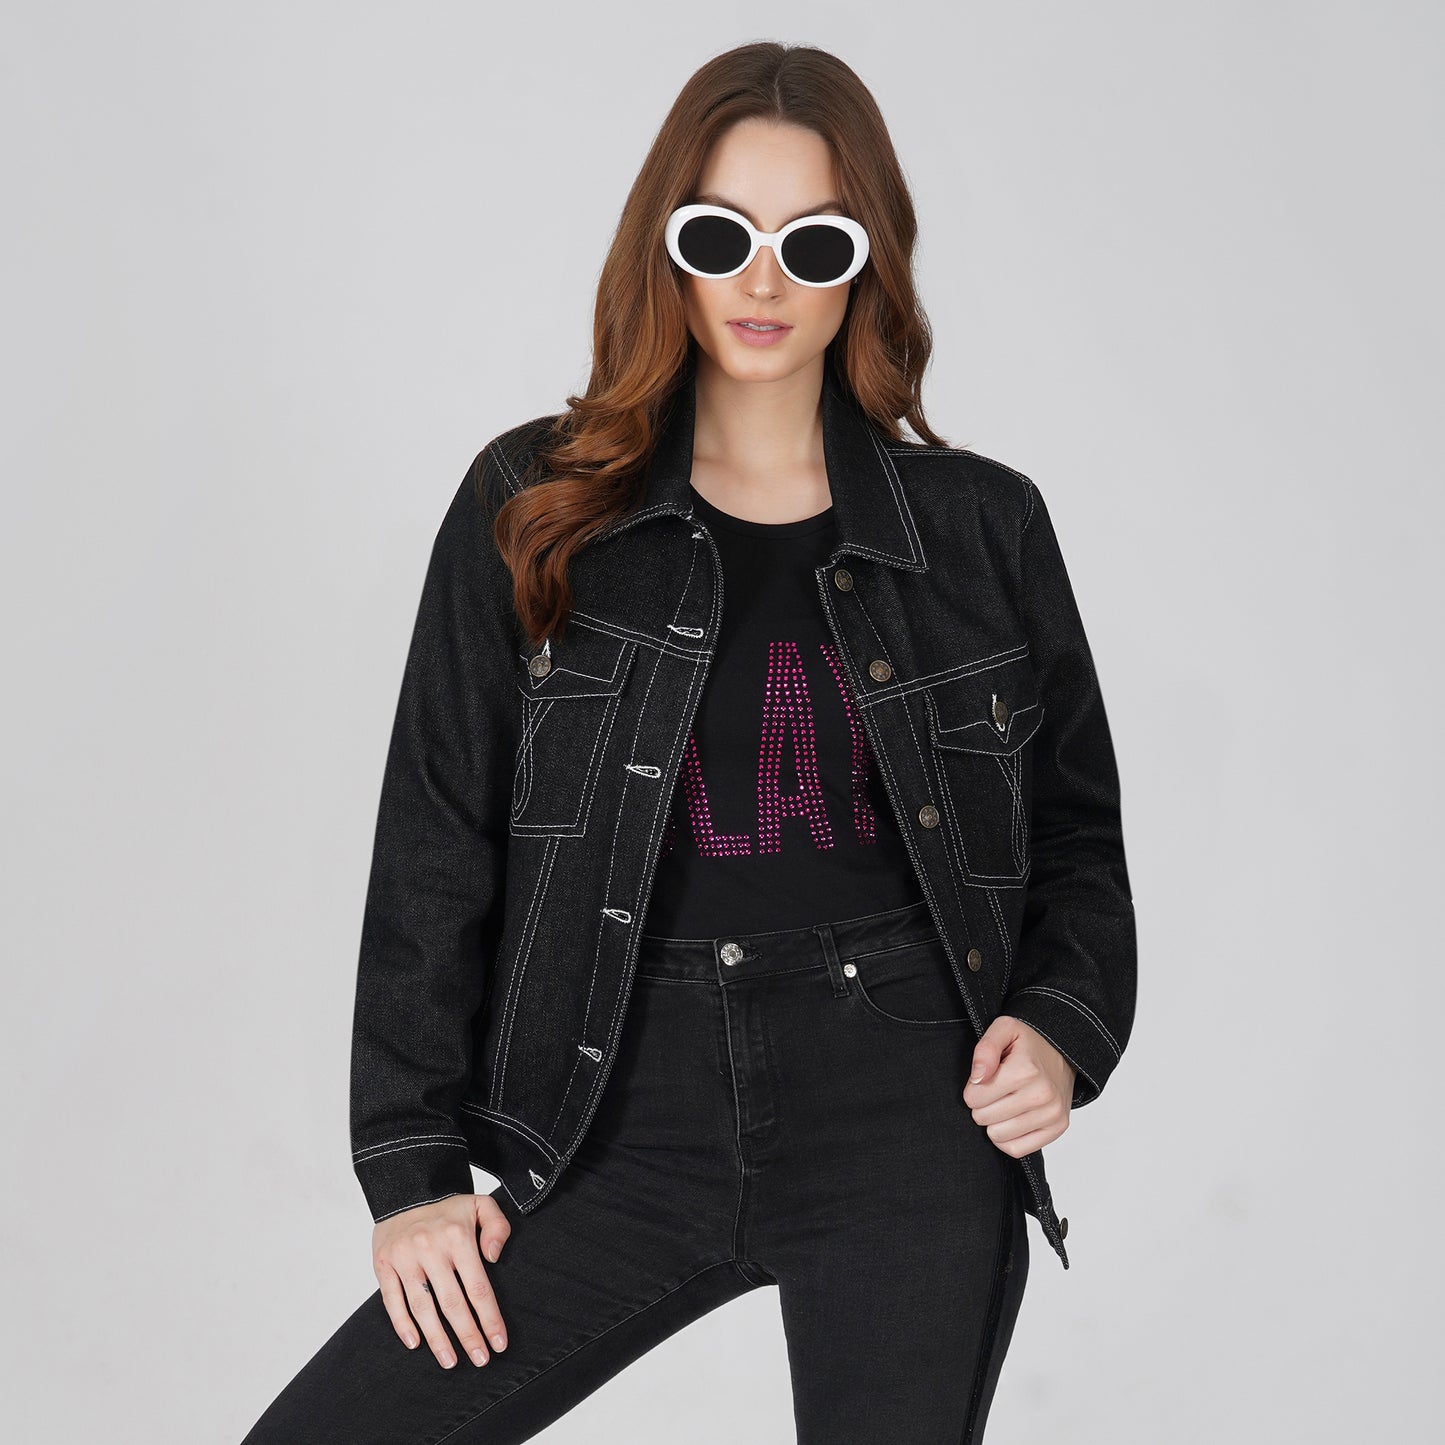 Buy Daacee Casual Frayed Tassel Black Denim Jacket for Women Fashion Fringe  Rhinestone Cowgirl Jean Coats, Black, 3X-Large at Amazon.in